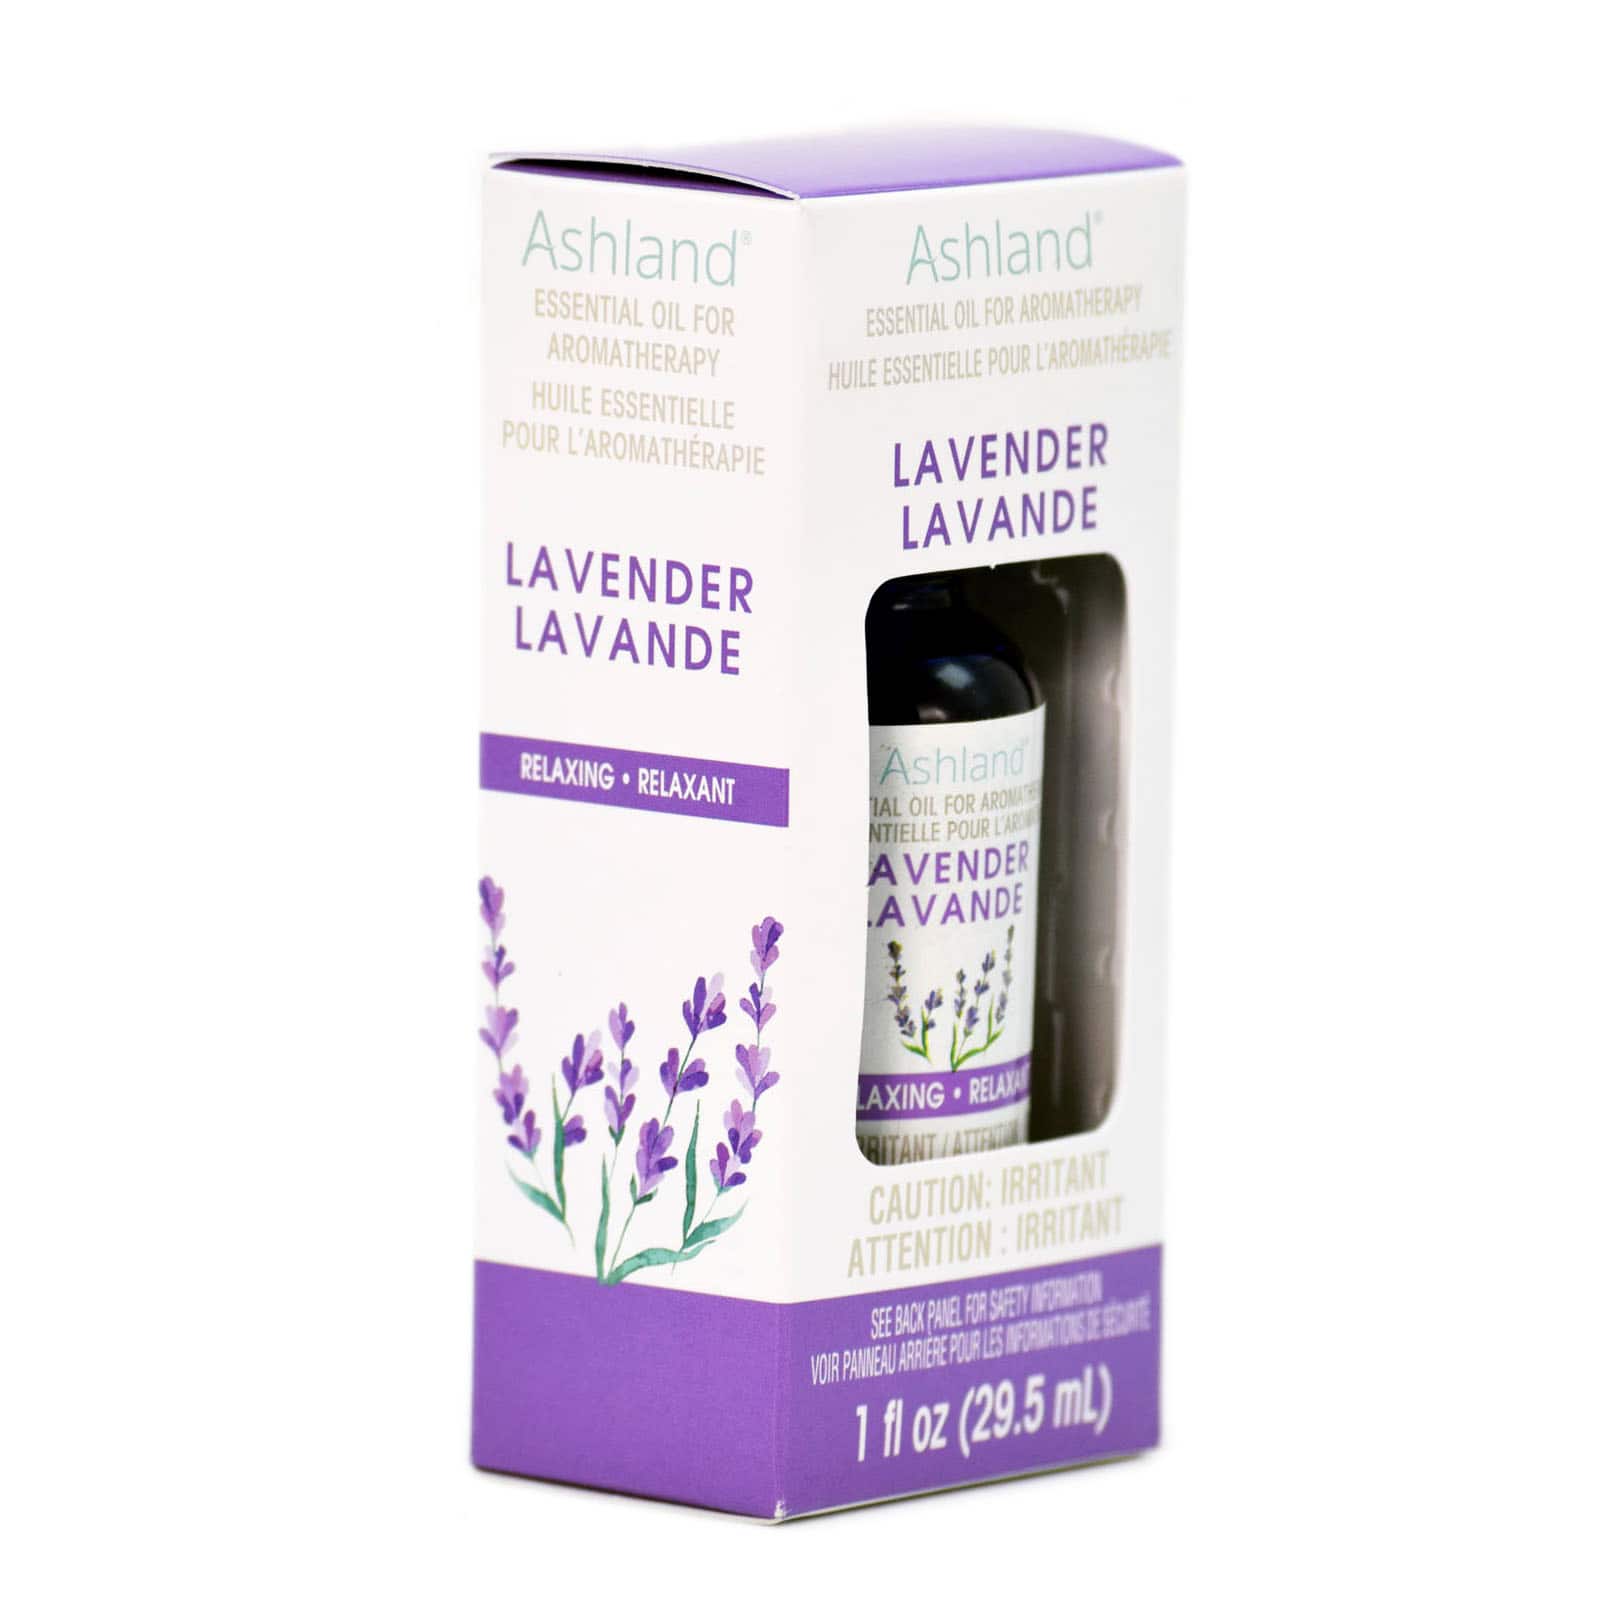 Set of 10 Essential Oil Lavender Vanilla Rose Blue Water Jasmine - Bed Bath  & Beyond - 39204575